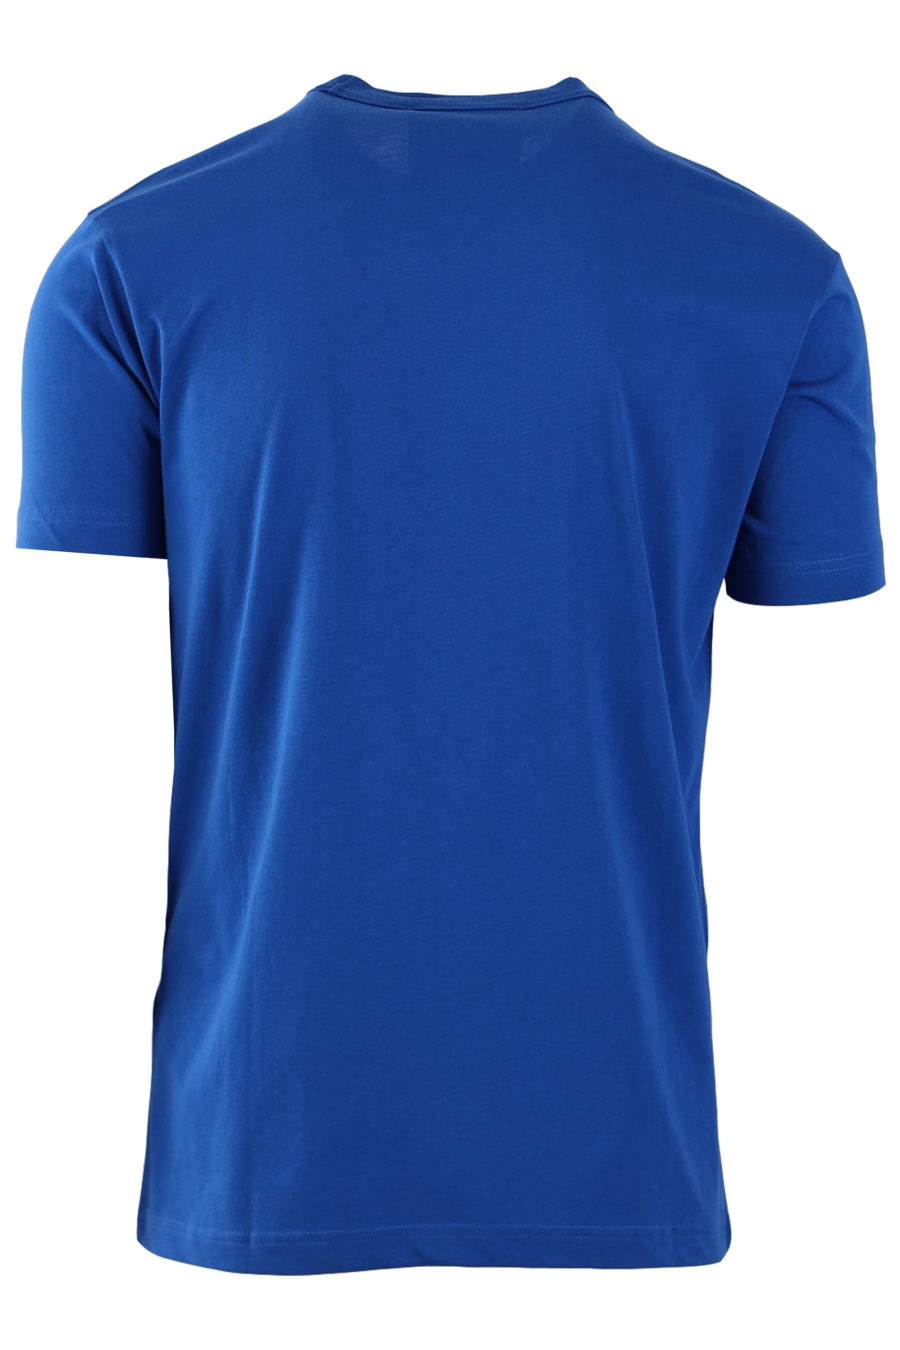 Blaues T-Shirt mit gummiertem Logodruck - c0976c8fc57fec42b29a1ffe87211498b5736947